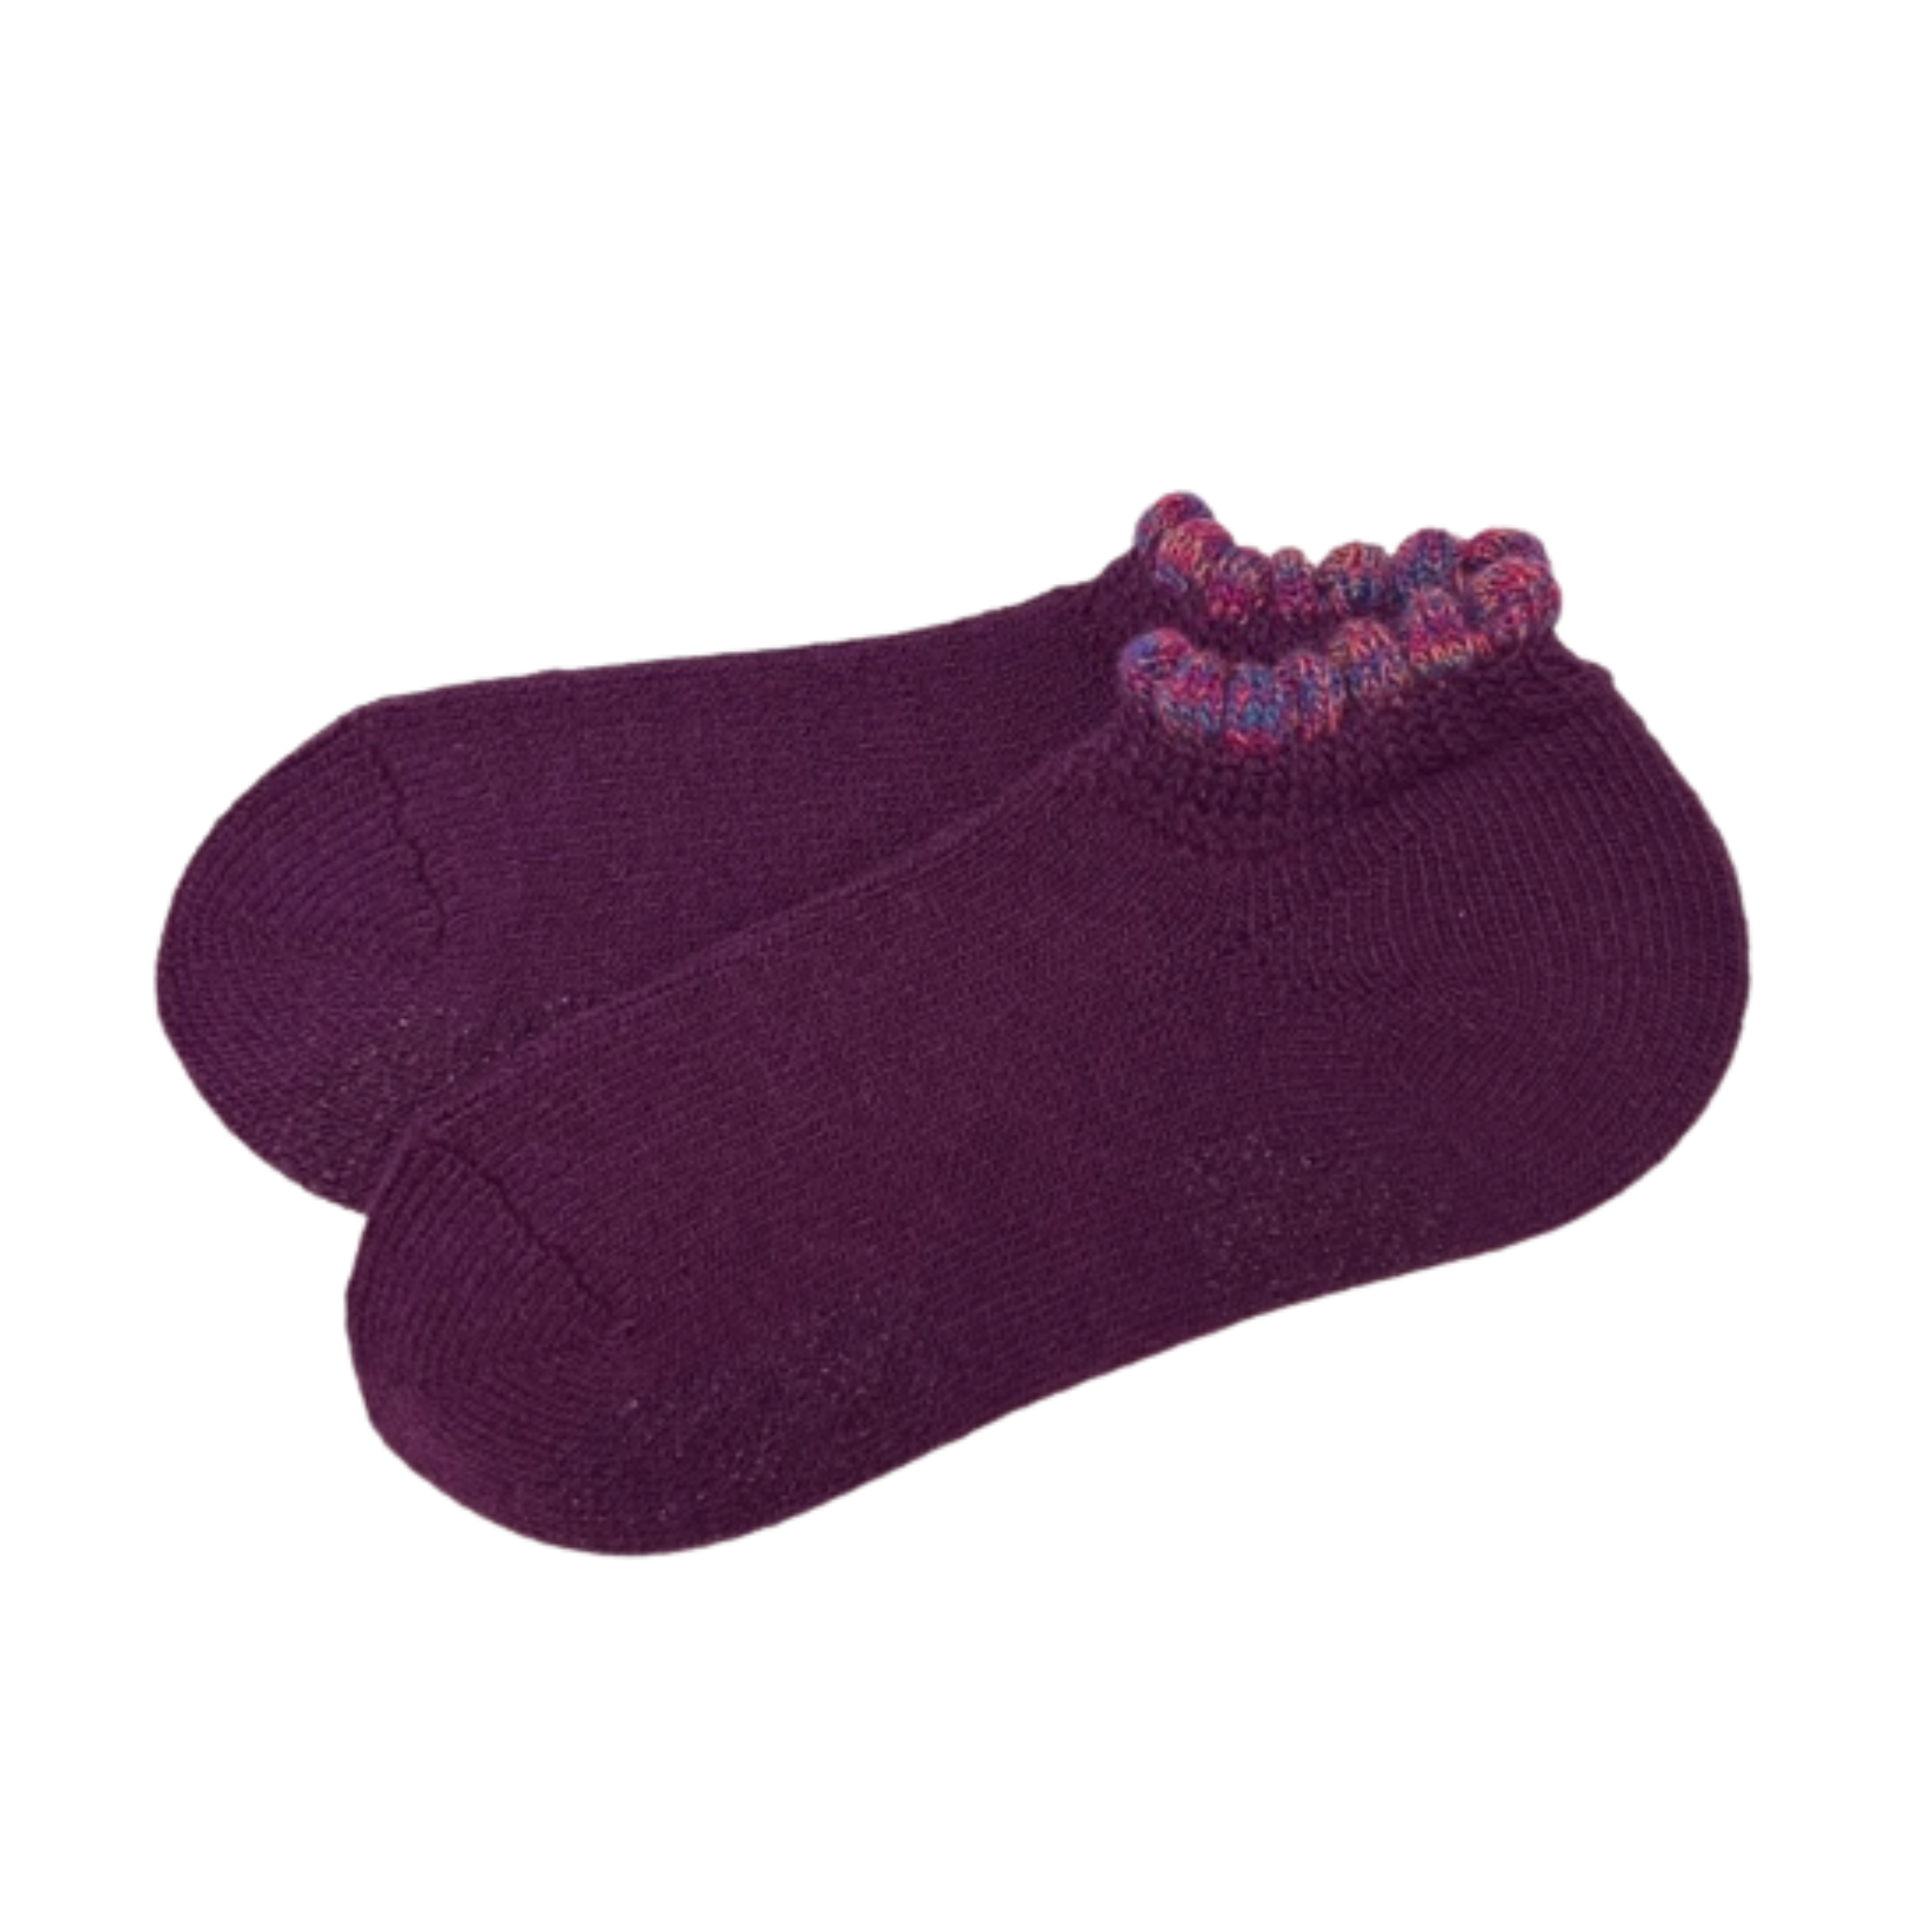 CHERRYSTONE: Comfy Handcrafted Slipper Socks & Gifts – CHERRYSTONEstyle